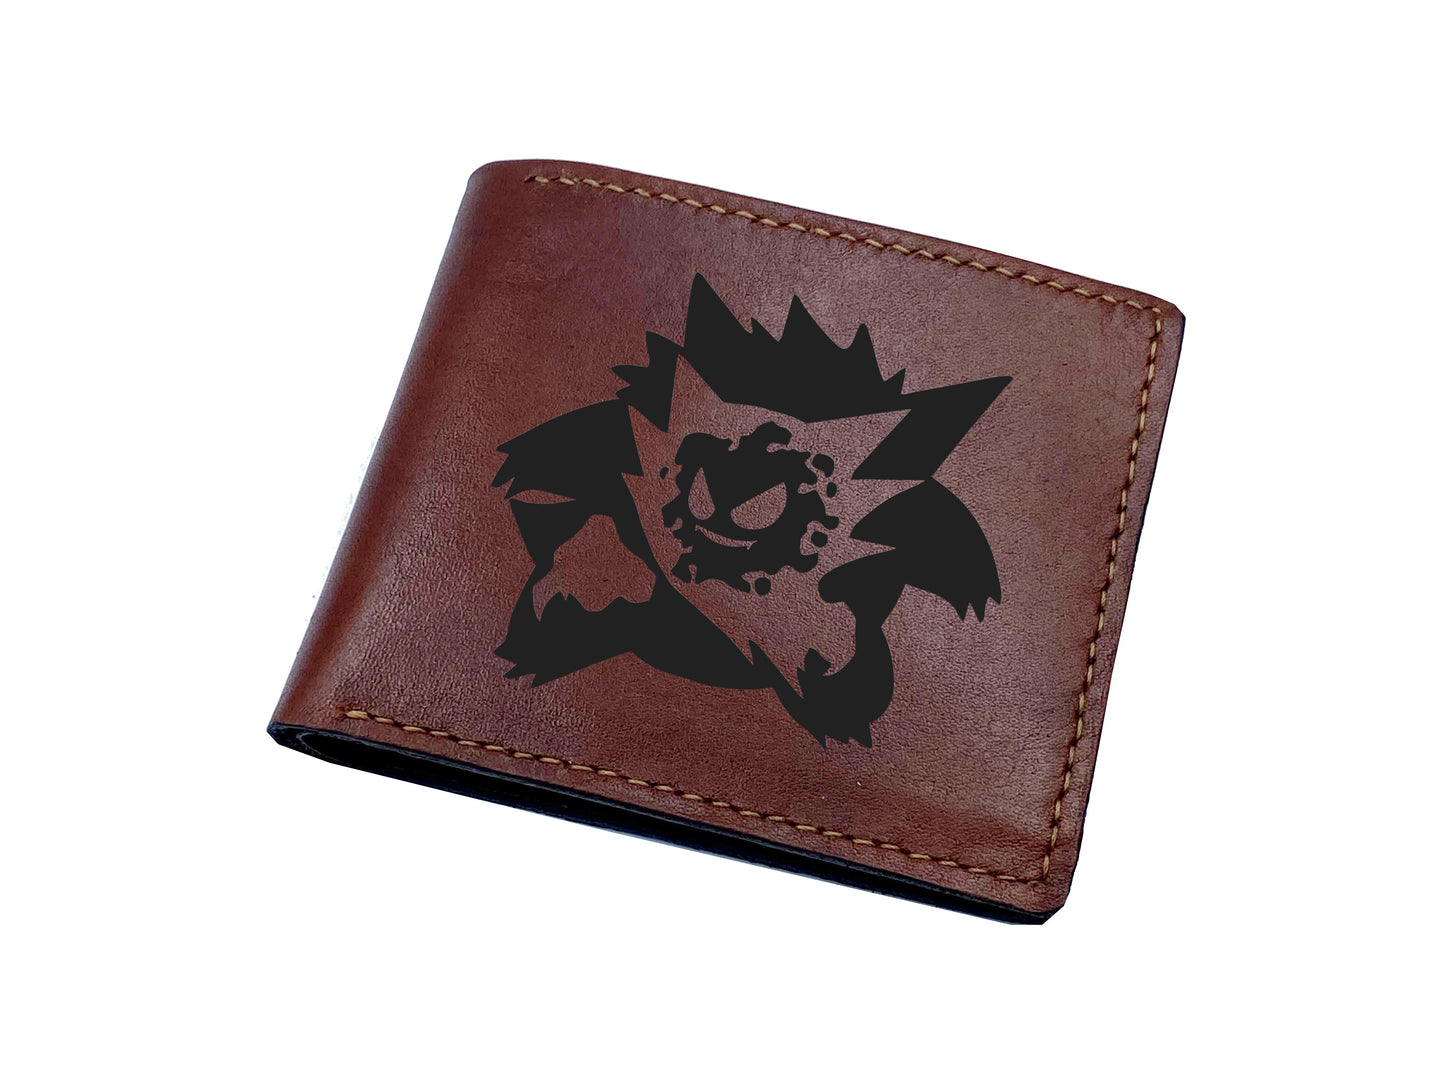 Mayan Corner - Pokemon Evolution leather wallet, bifold minimalist wallet for men, pokemon men's wallet, leather gift for him